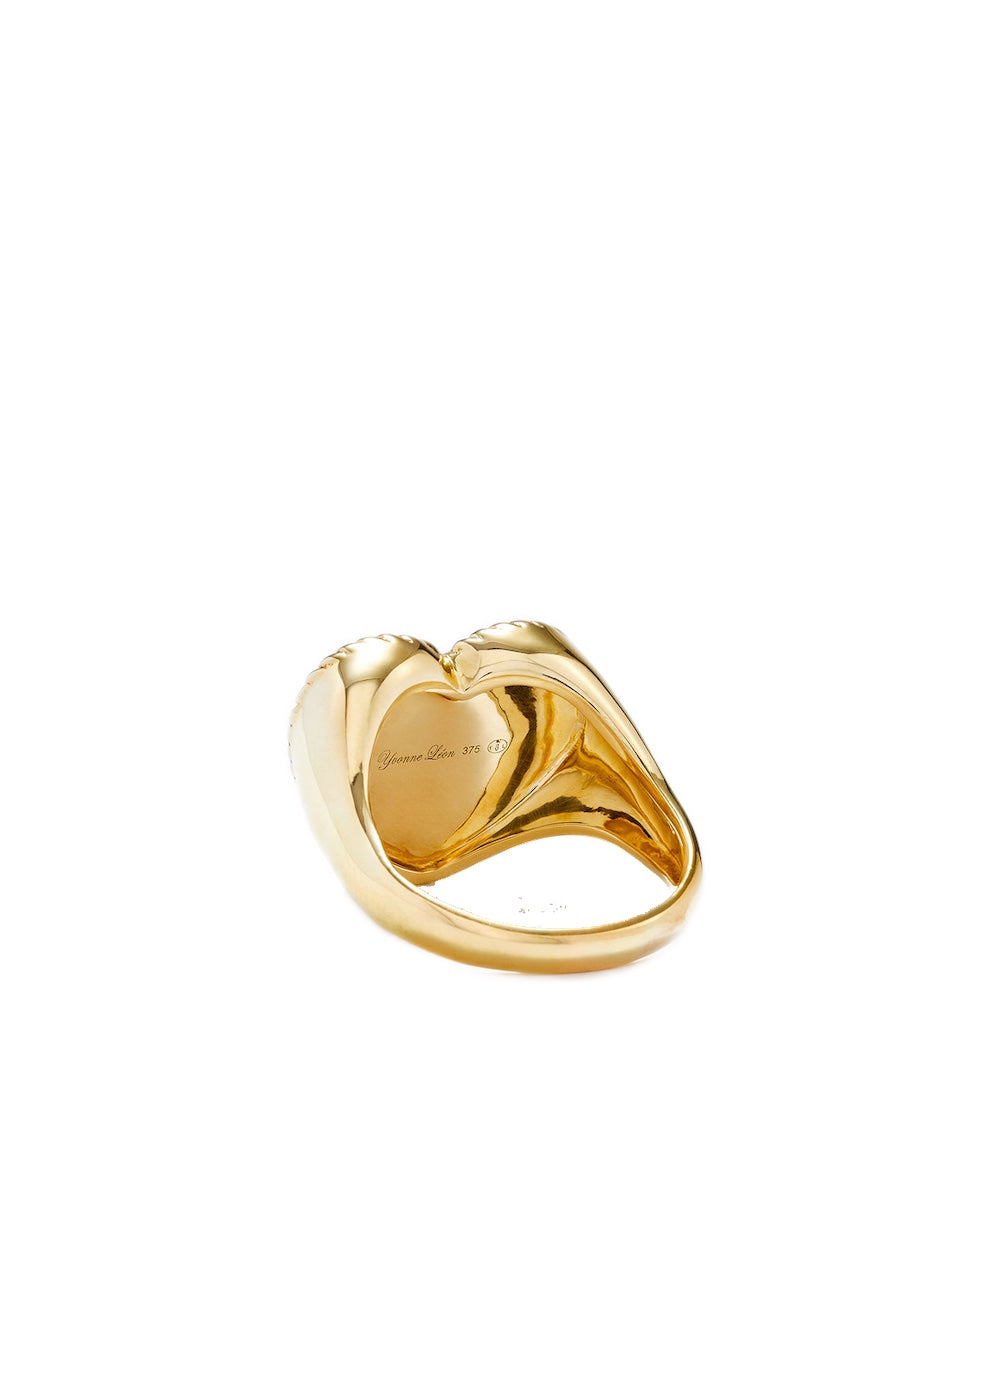 Chevalière Coeur Corail 9k yellow gold diamond signet ring